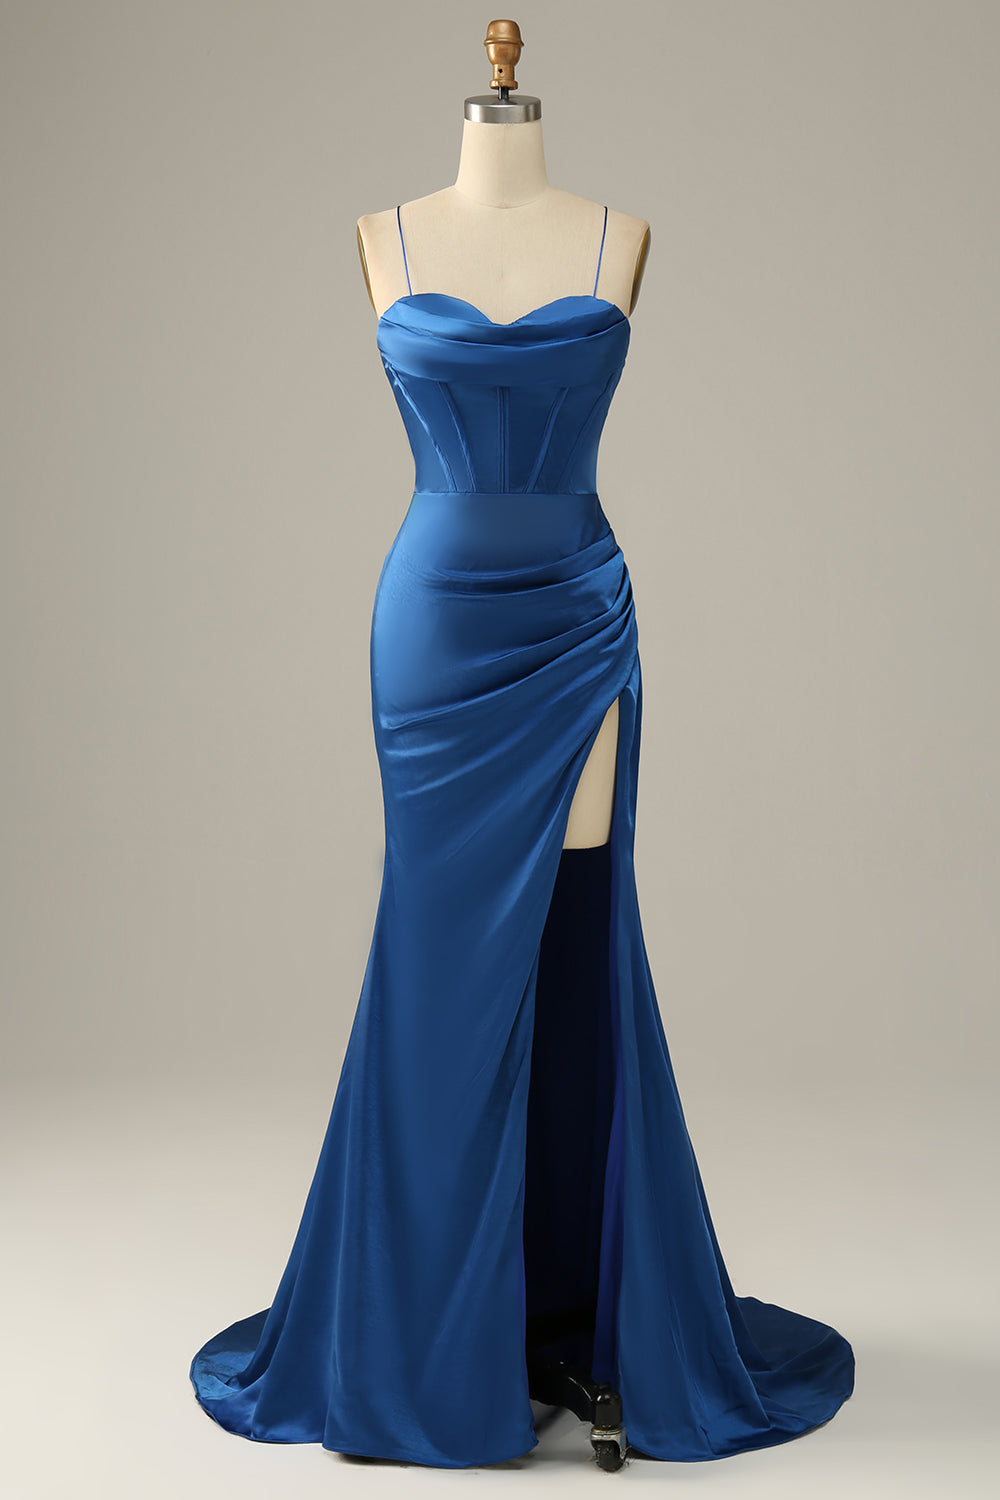 Zapakasa Women Prom Dress Royal Blue Spaghetti Straps Mermaid Evening Dress